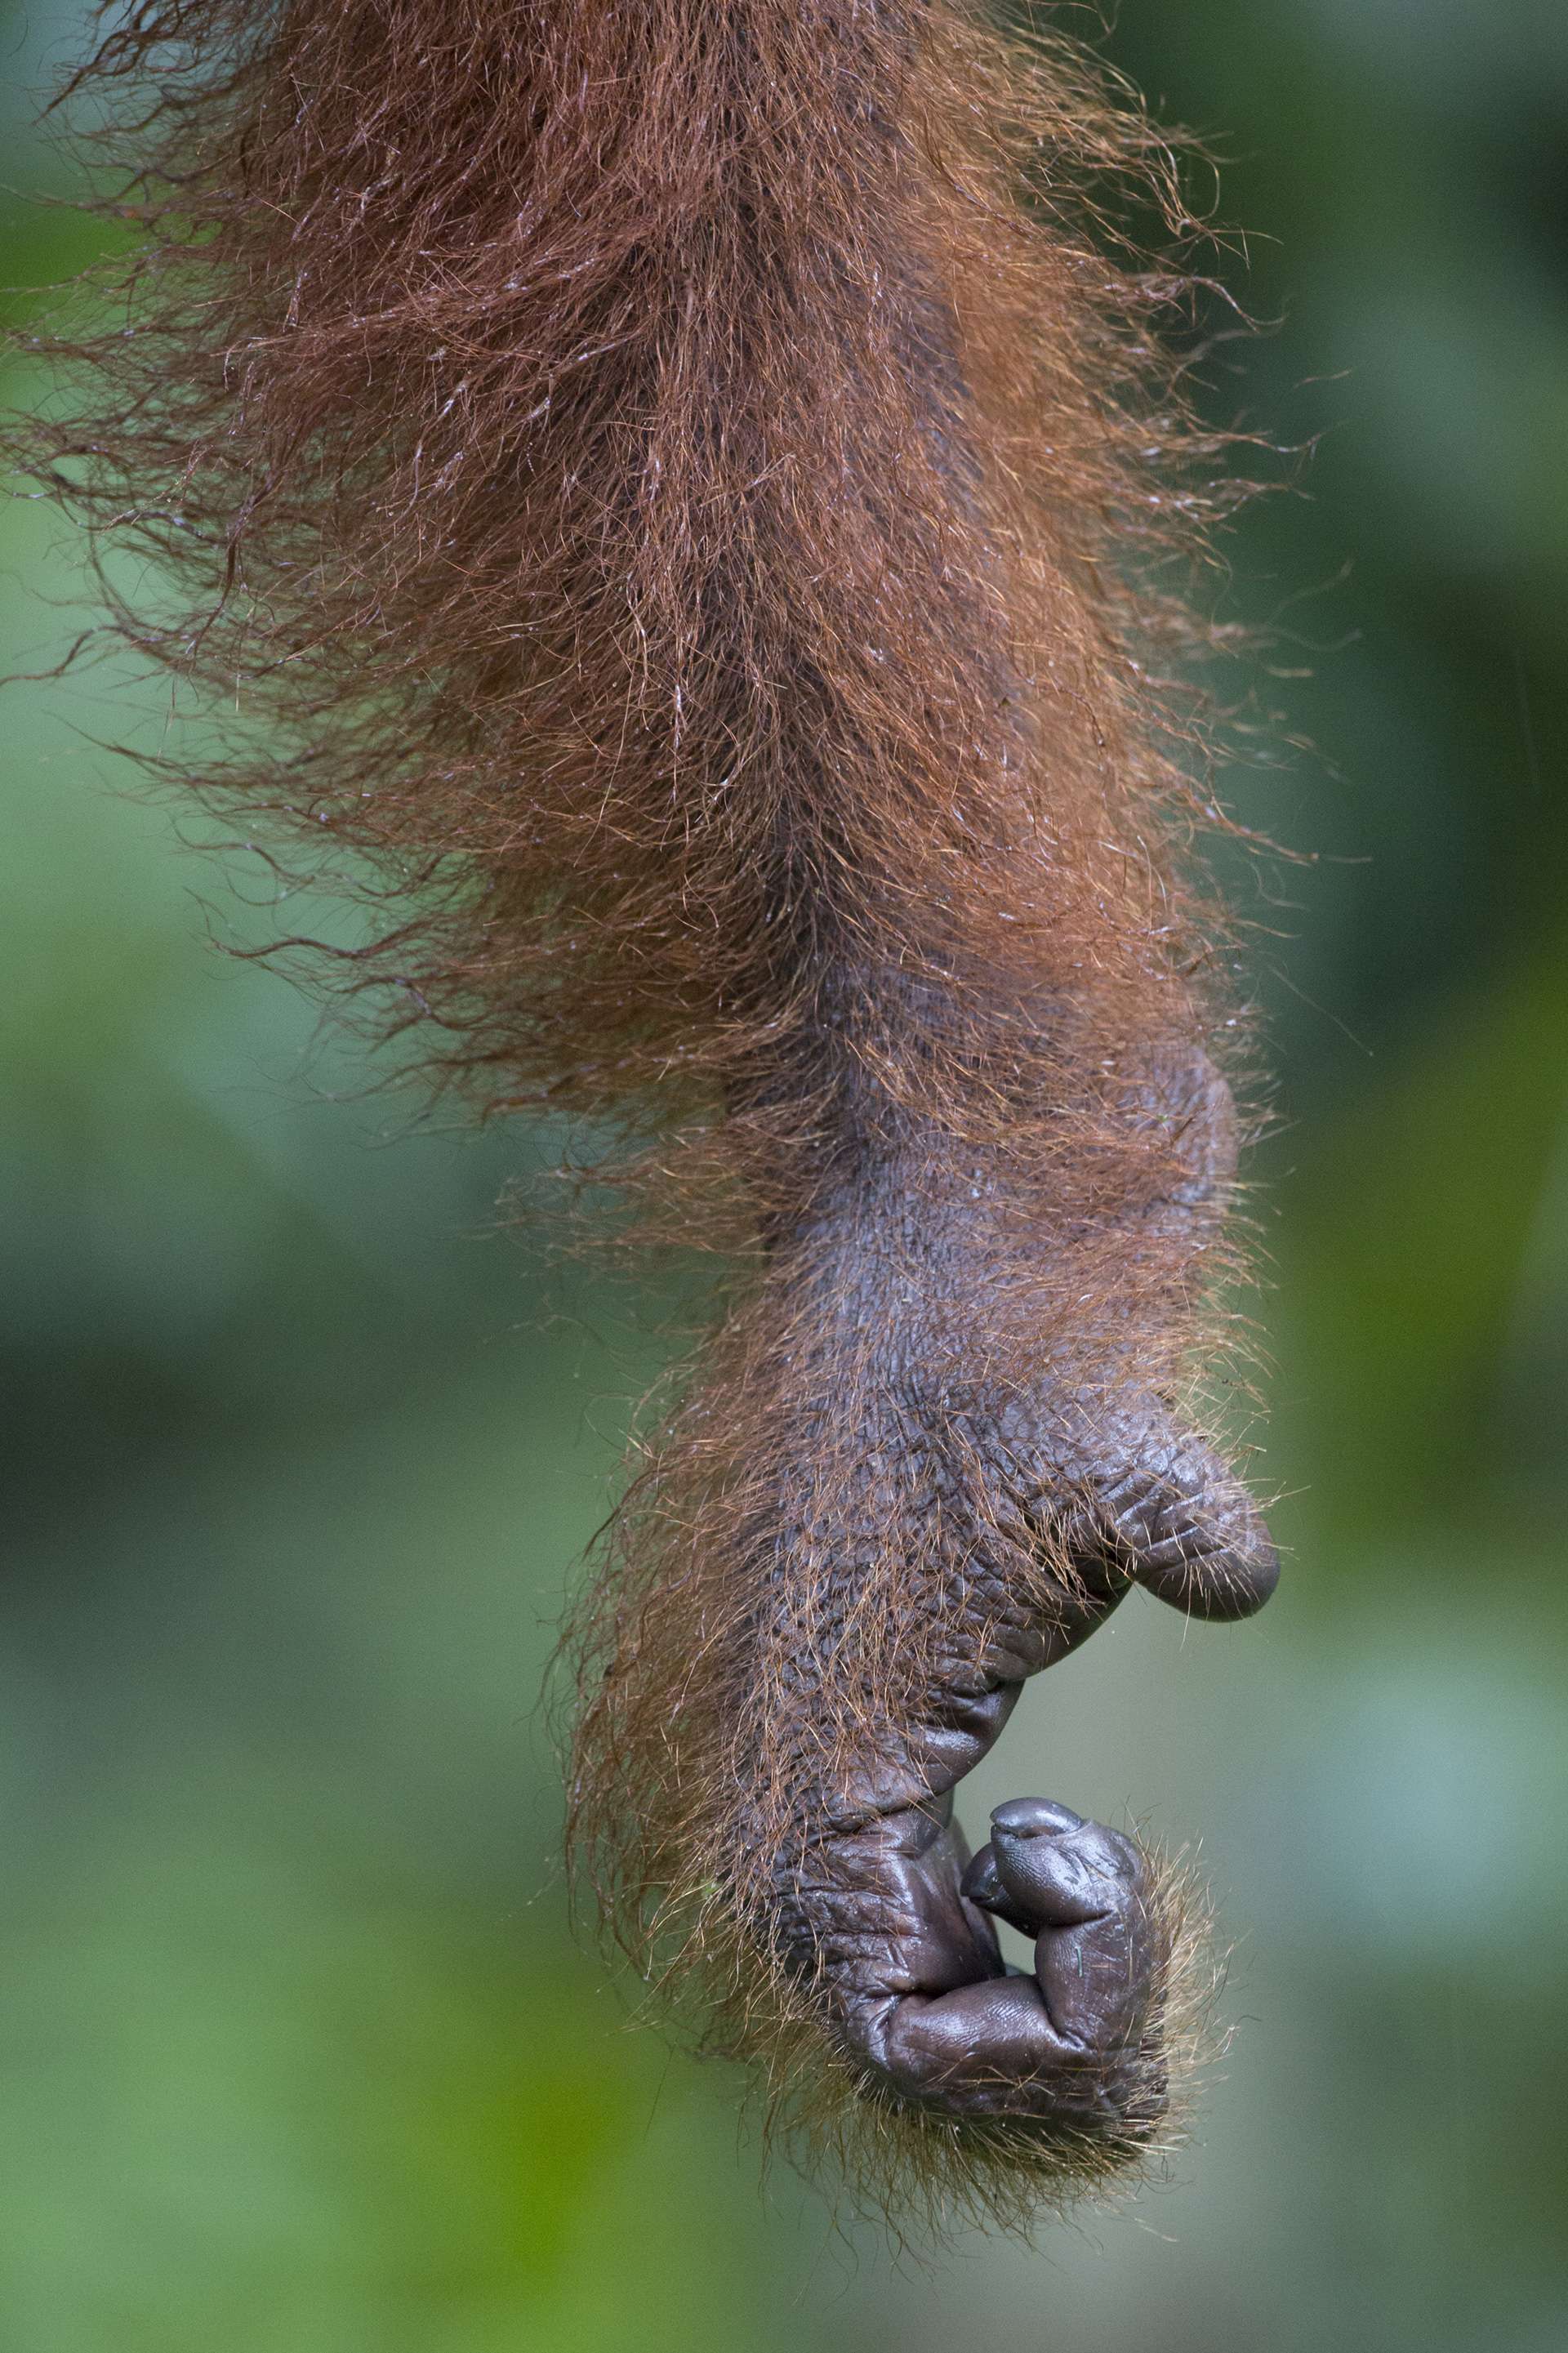 Gilles Martin's photograph of an orangutan from Borneo